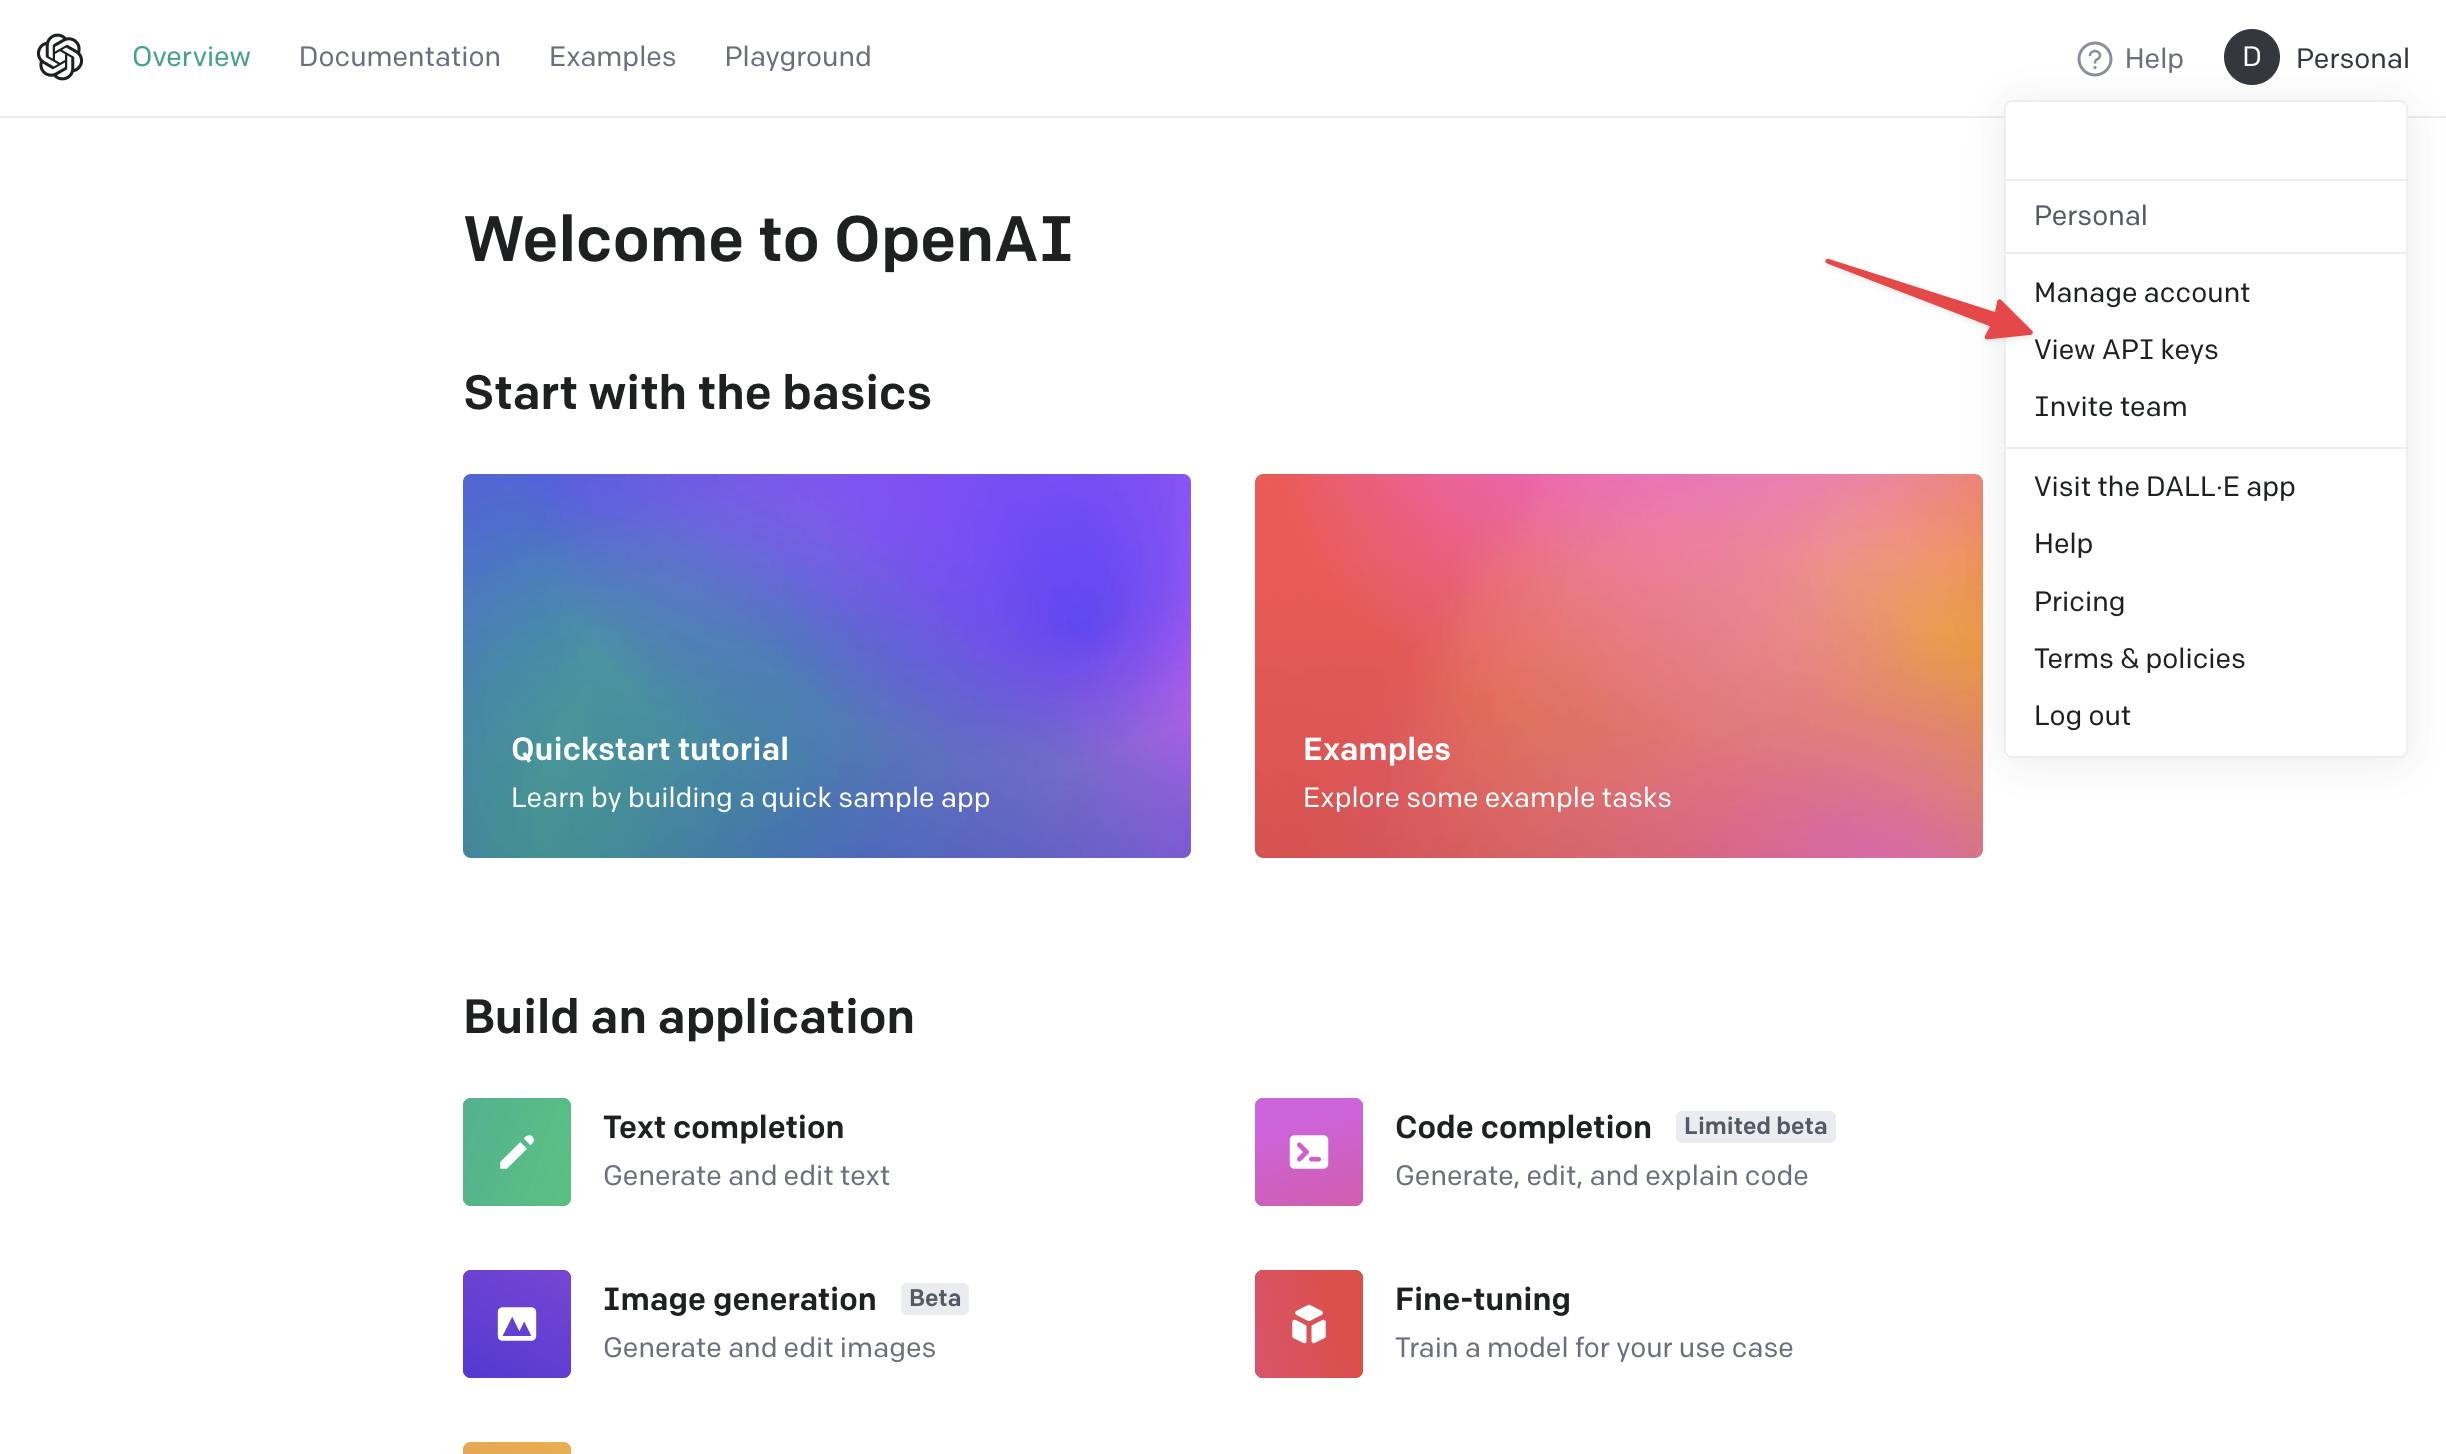 openai view API keys